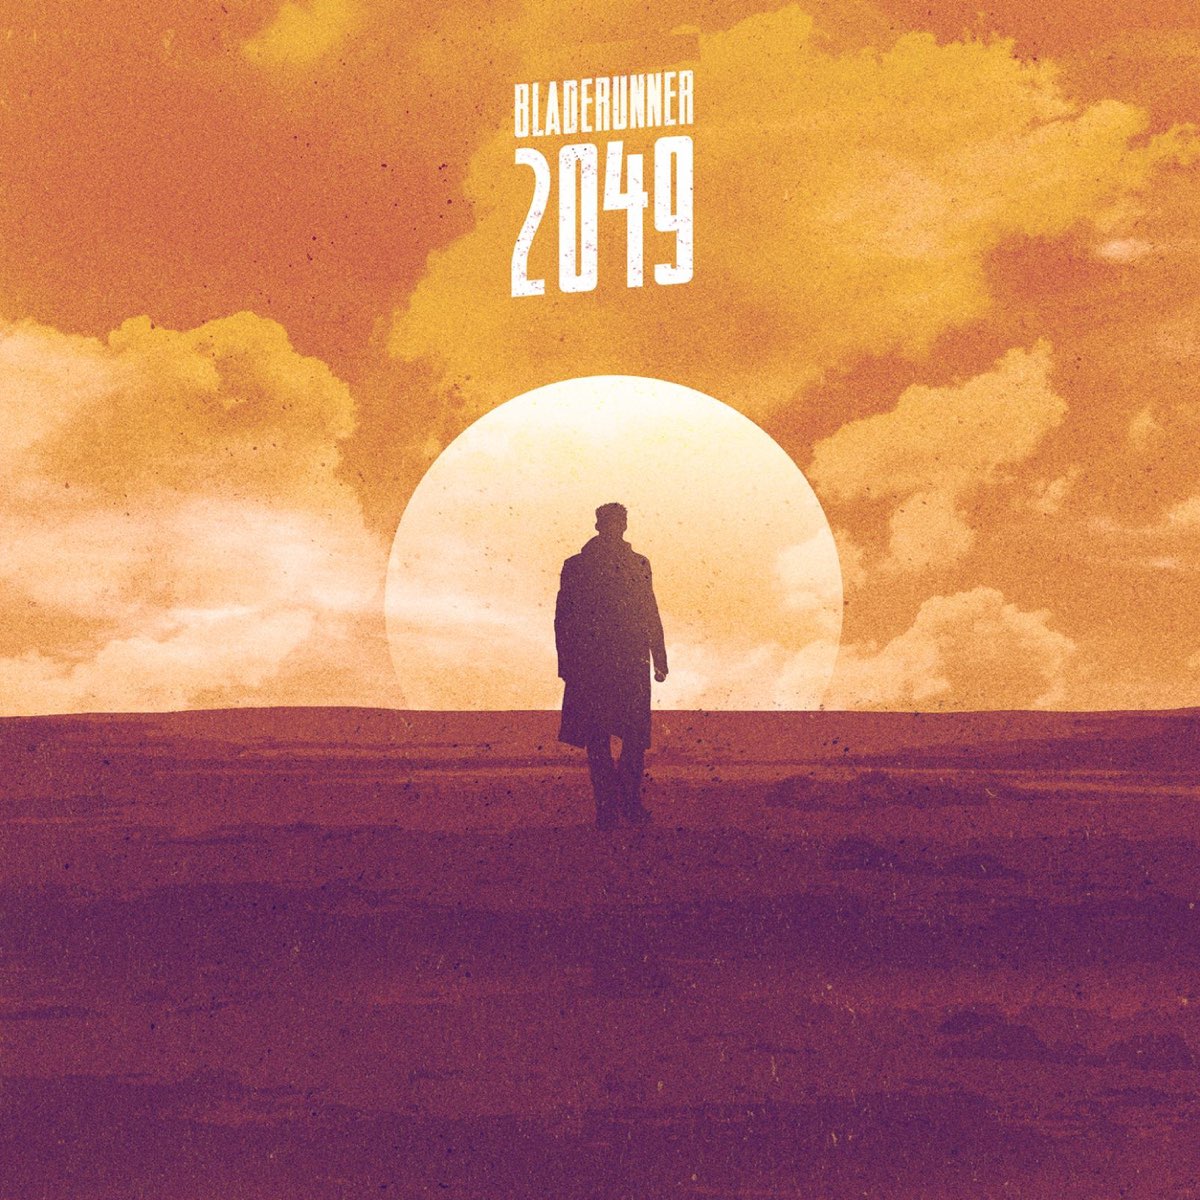 Blade Runner 2049 (Road Soundtrack edit) - Single by Blade Runner & Magnus  Deus on Apple Music